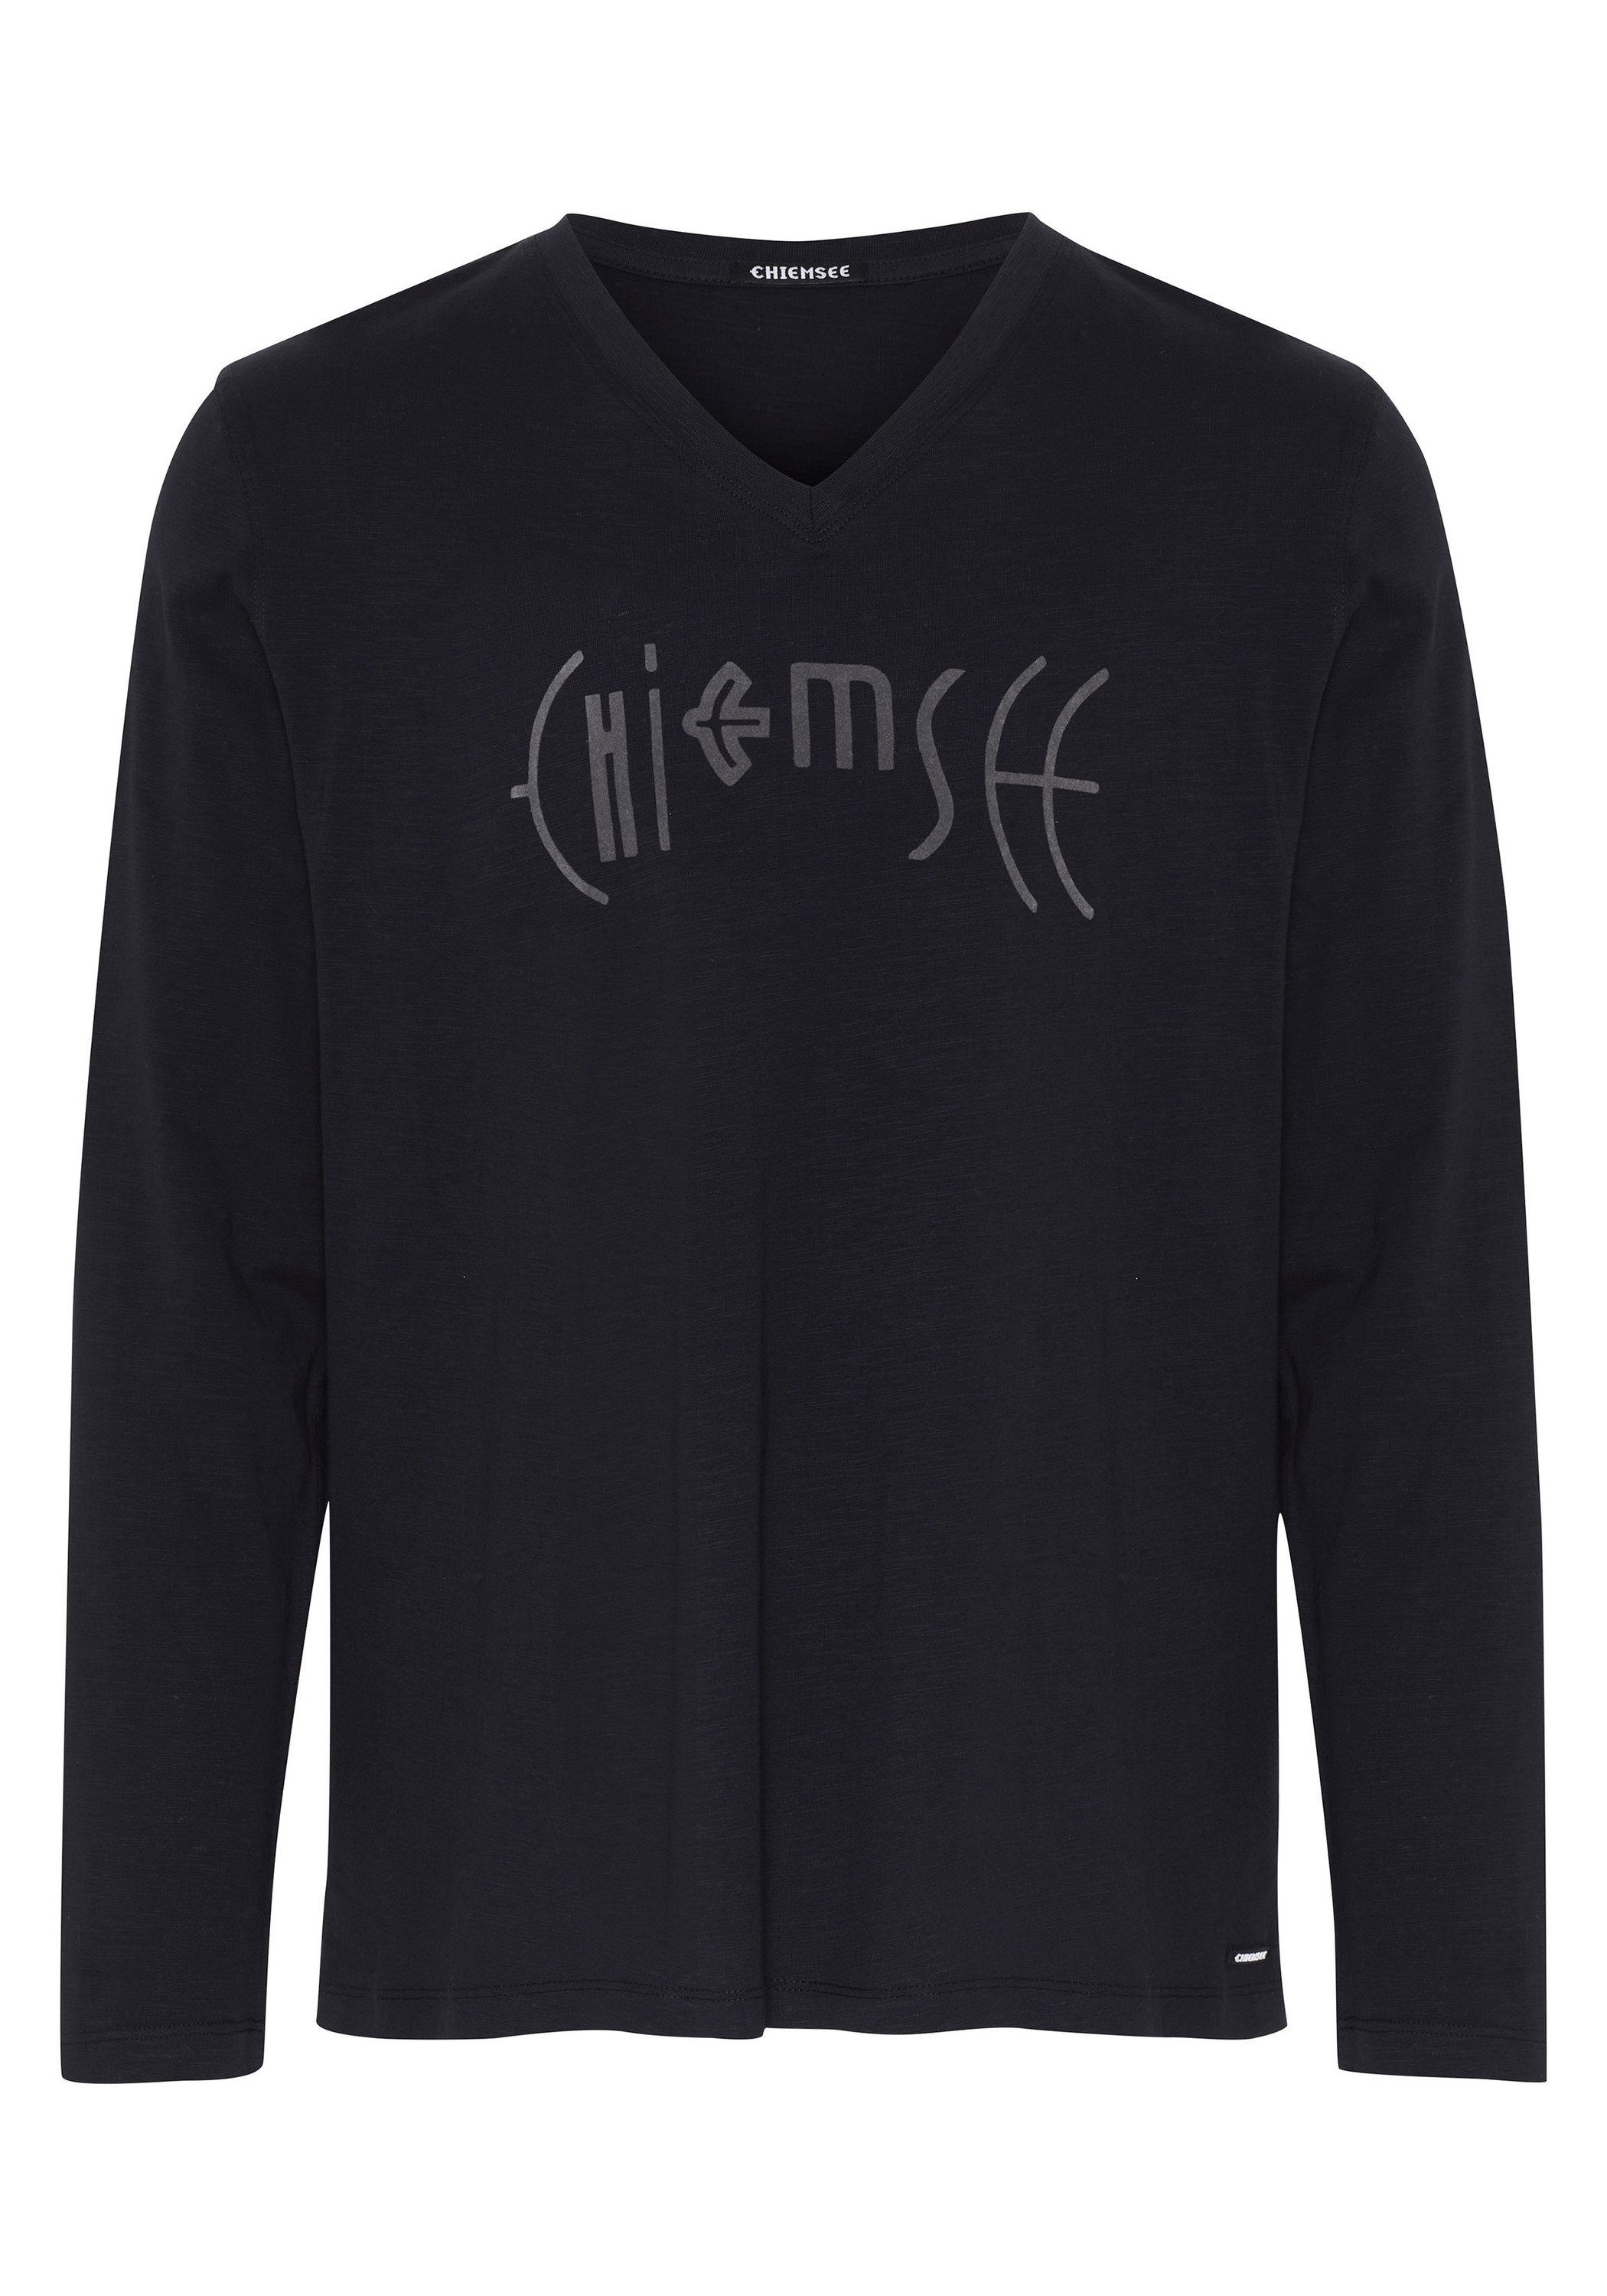 Chiemsee Longsleeve Logo-Longsleeve Jersey V-Neck 1 aus schwarz mit